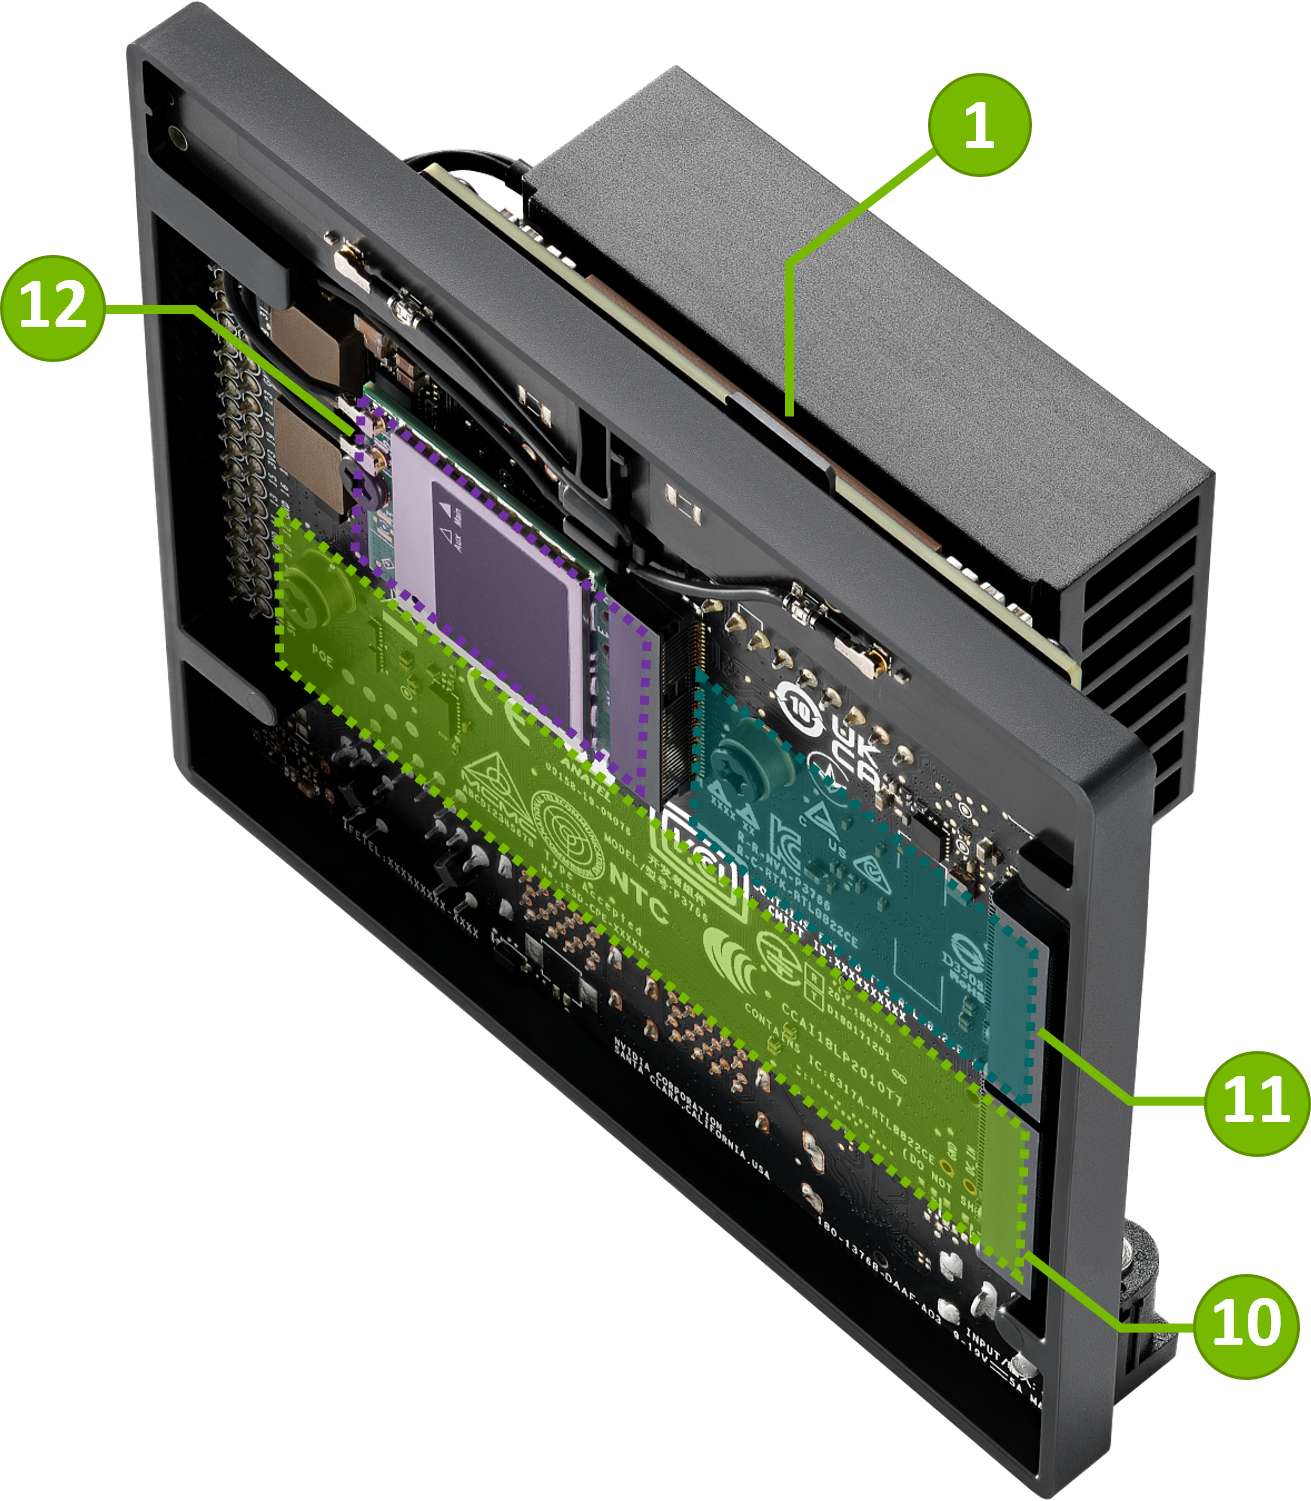 Jetson Orin Nano Developer Kit User Guide Hardware Specs Nvidia